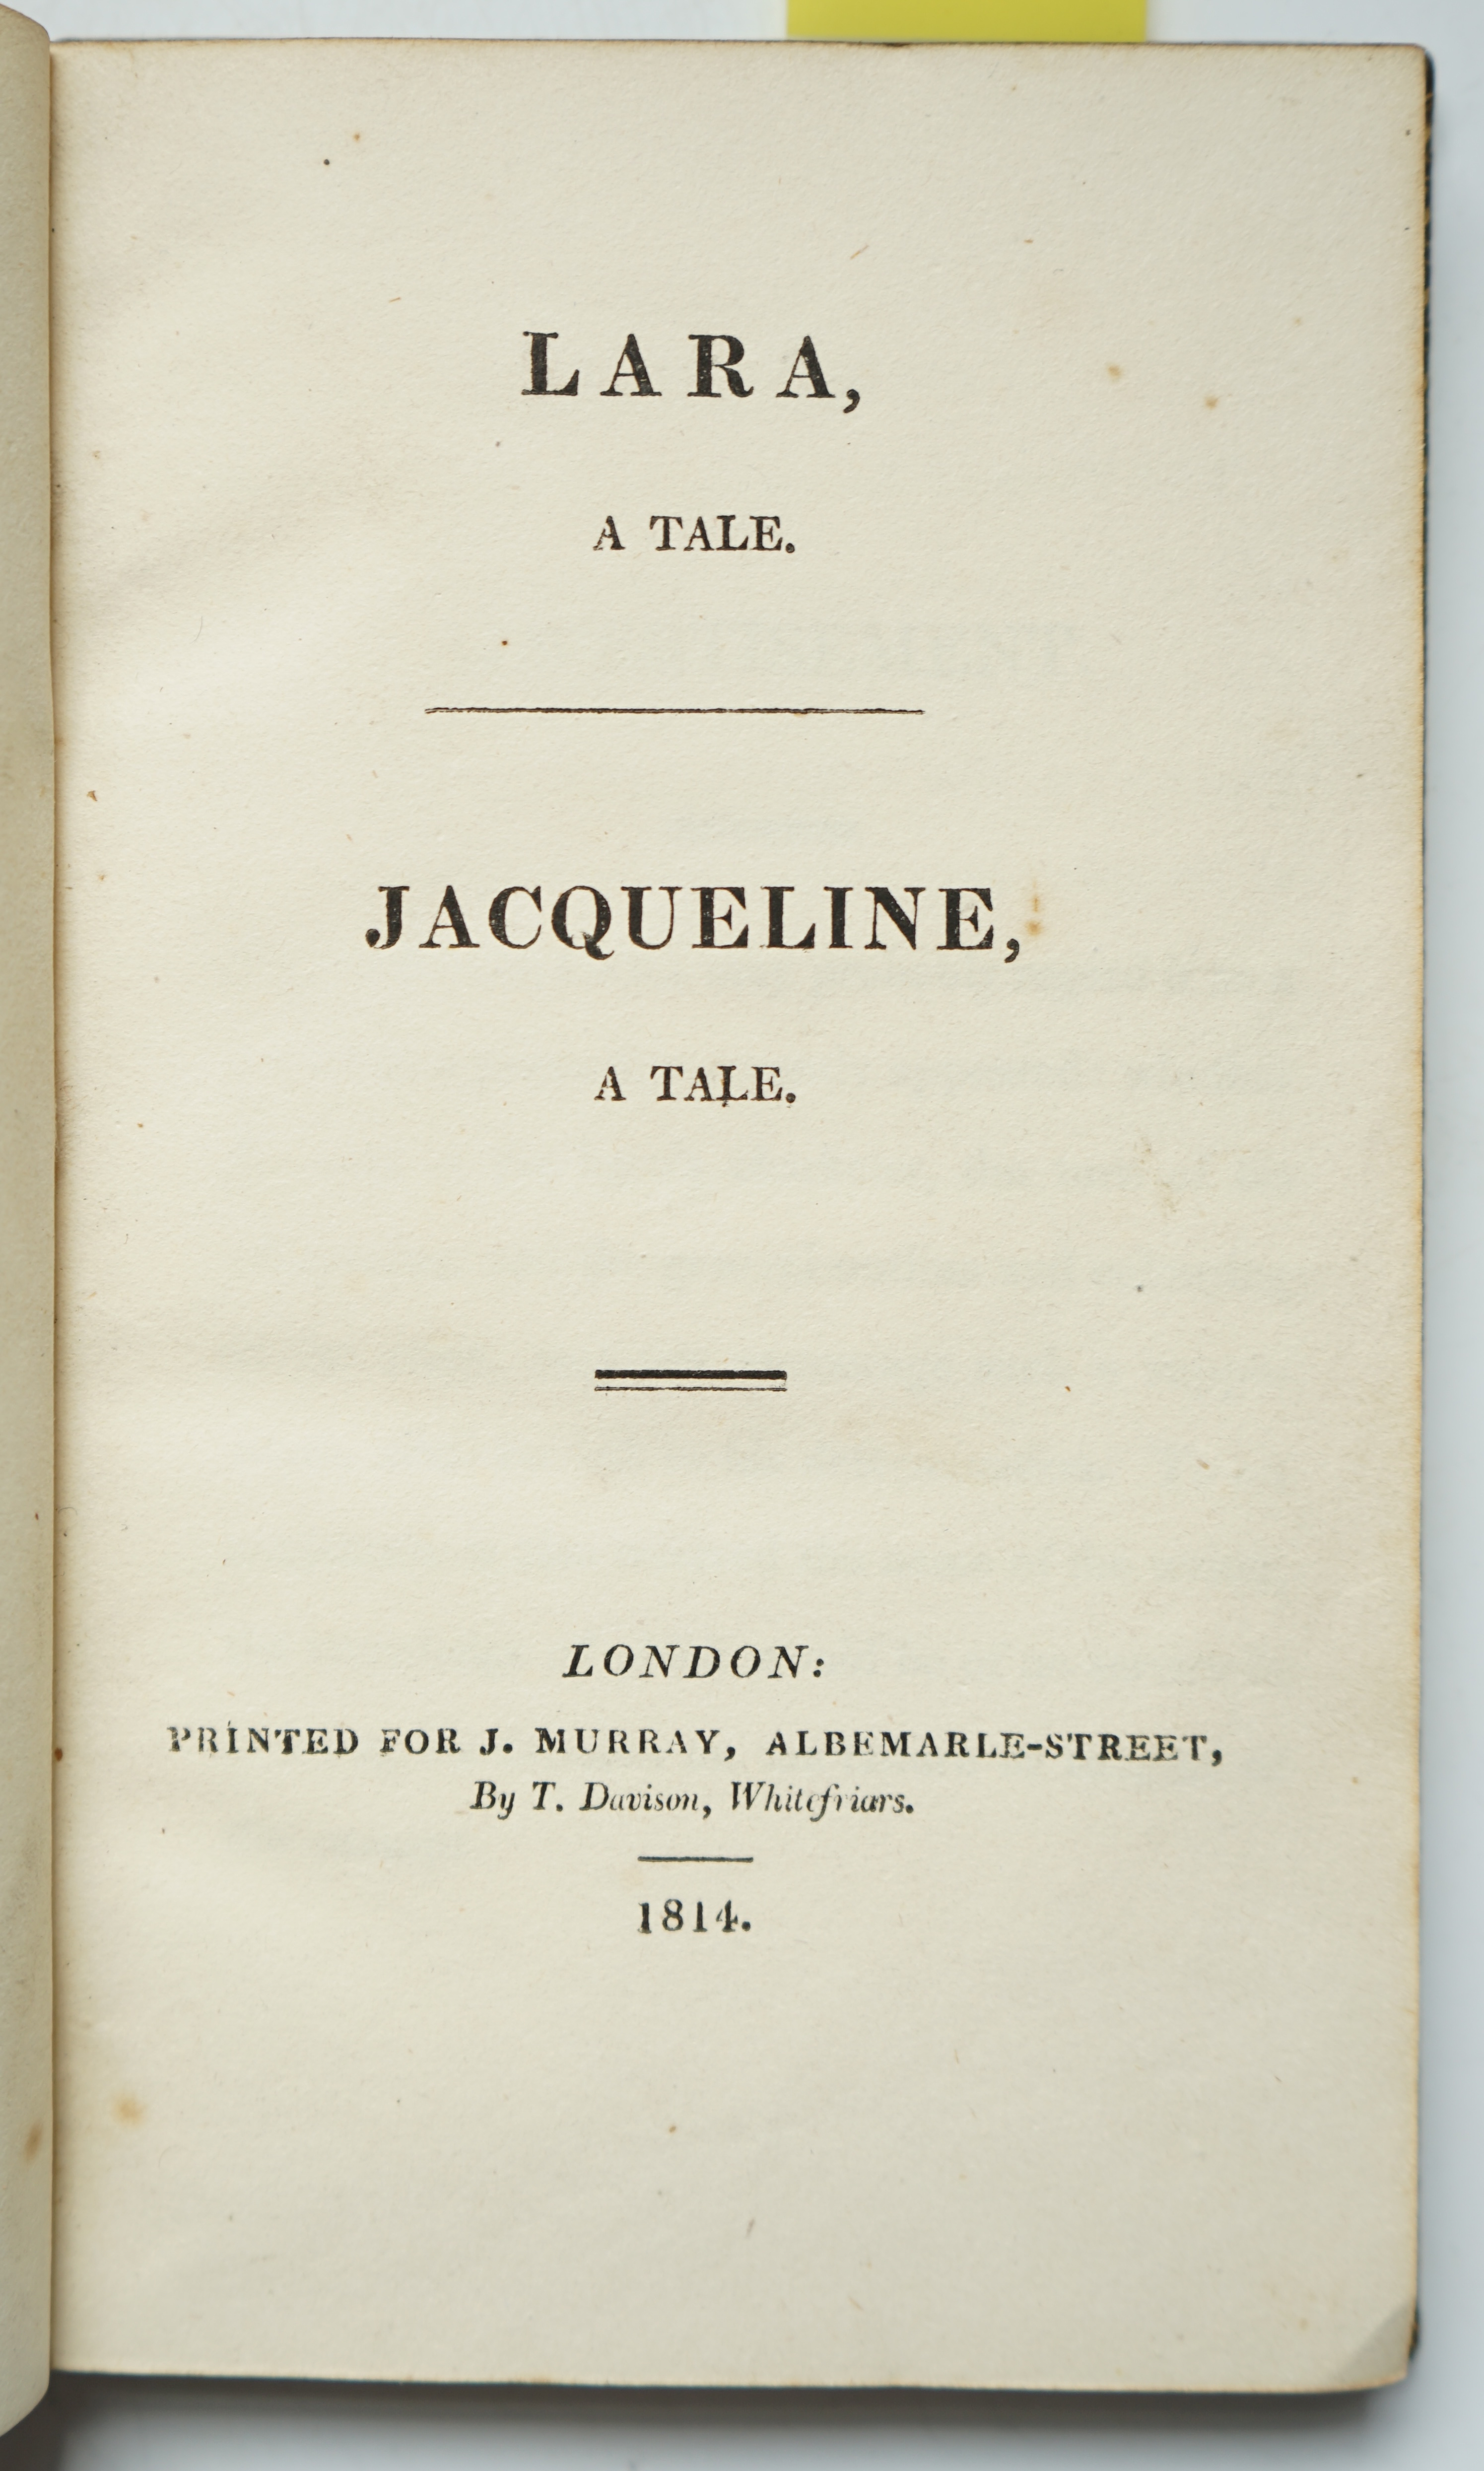 Byron, George Gordon Noel, Lord - Lara, a Tale; Jacqueline, a Tale, 1st edition, 12mo, calf, lacks half title and advertisements, John Murray, 1814.